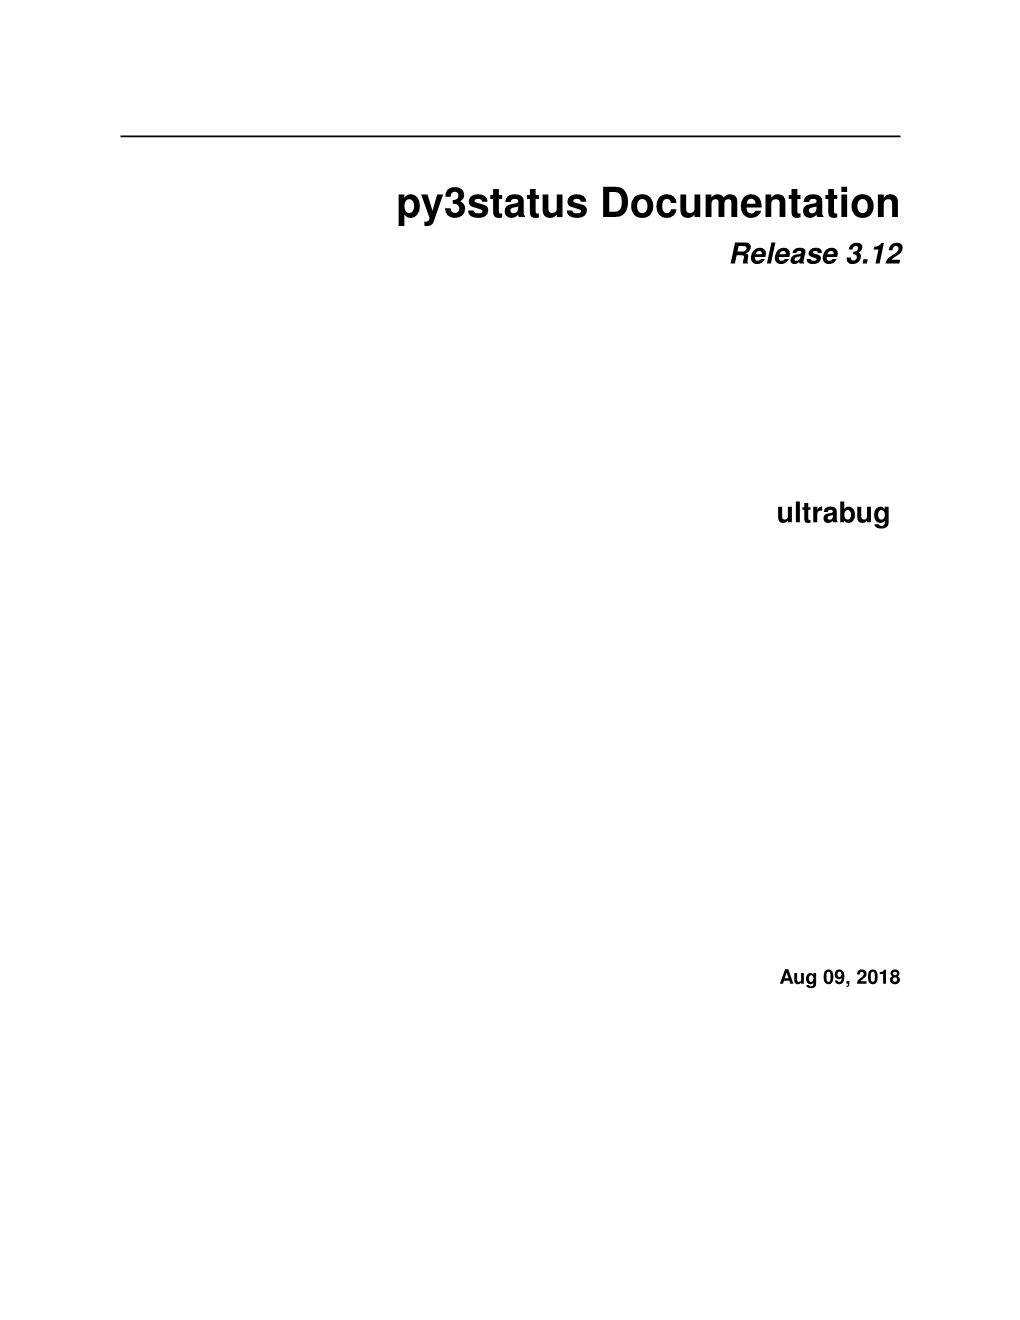 Py3status Documentation Release 3.12